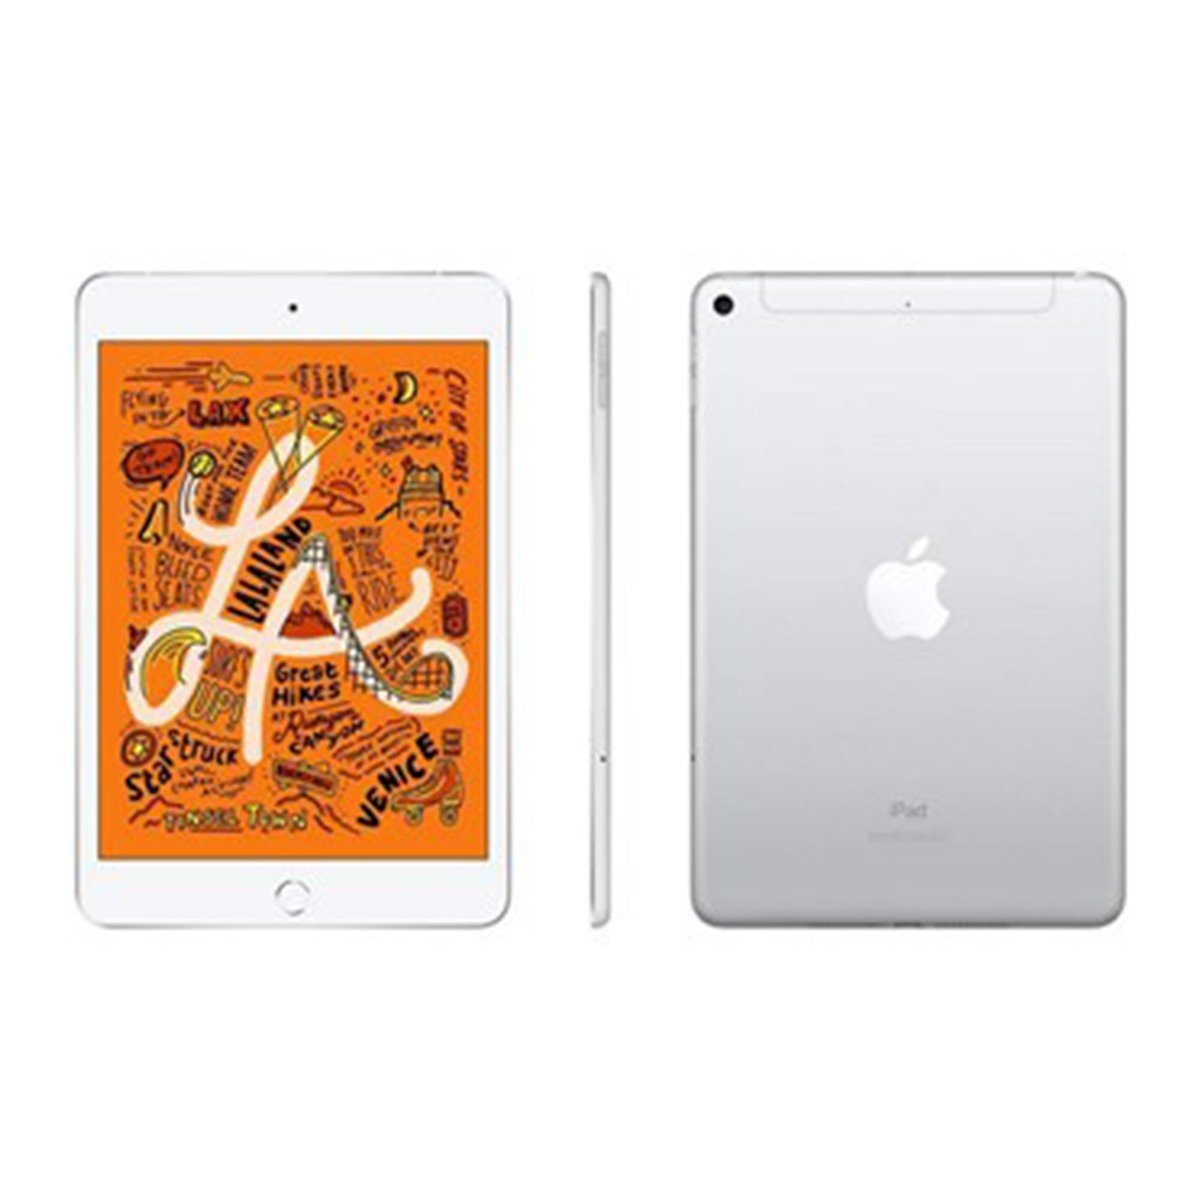 Apple iPad Mini (Wi-Fi + Cellular, 64GB) Silver